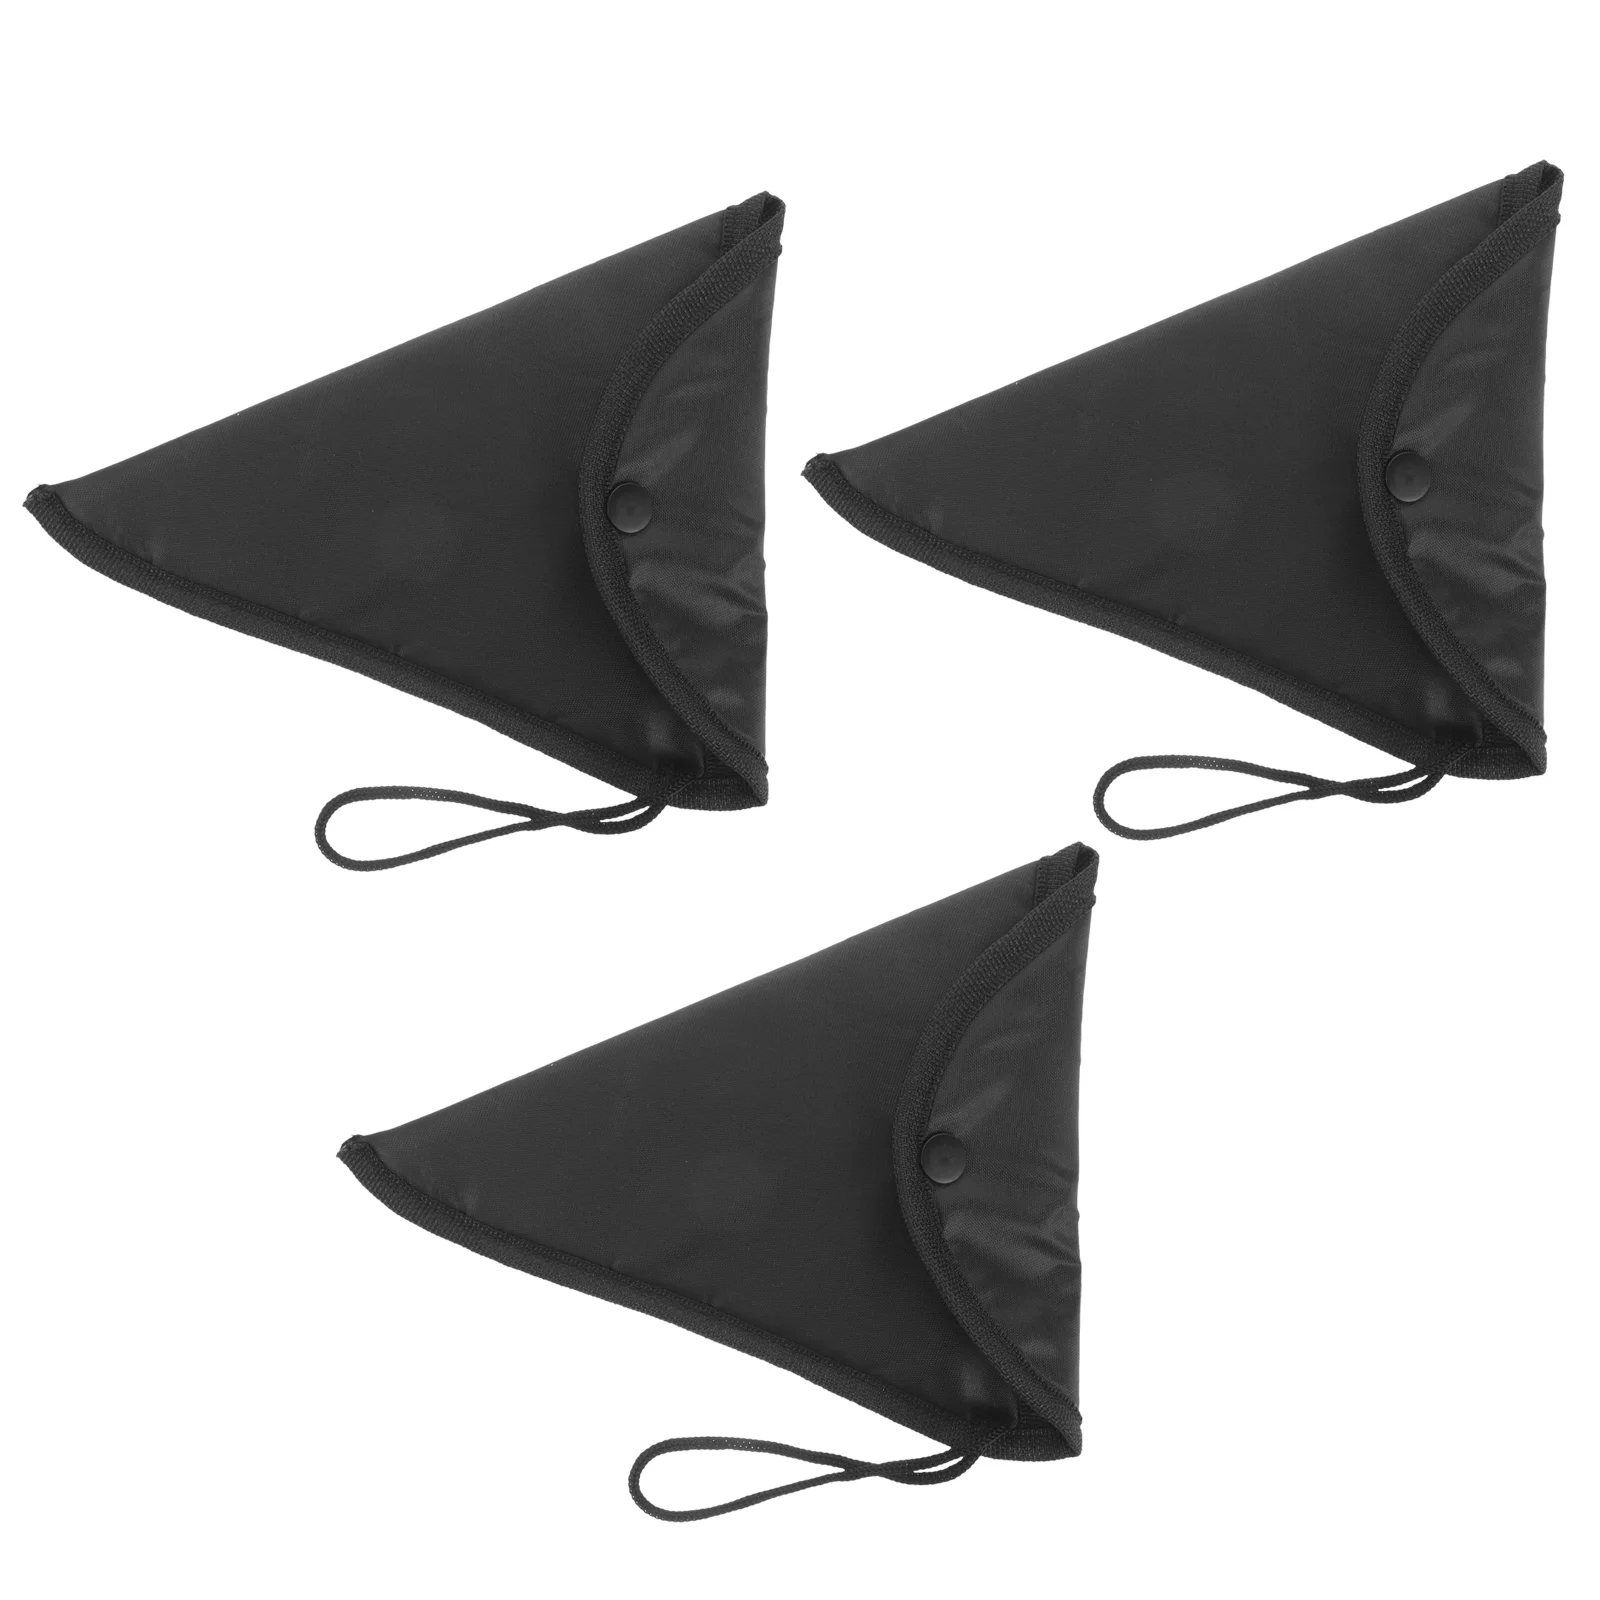 

3 Pcs Travel Accessories Ocarina Bag Protector Triangle Ceramics Portable 12 Holes Small Storage for Protection